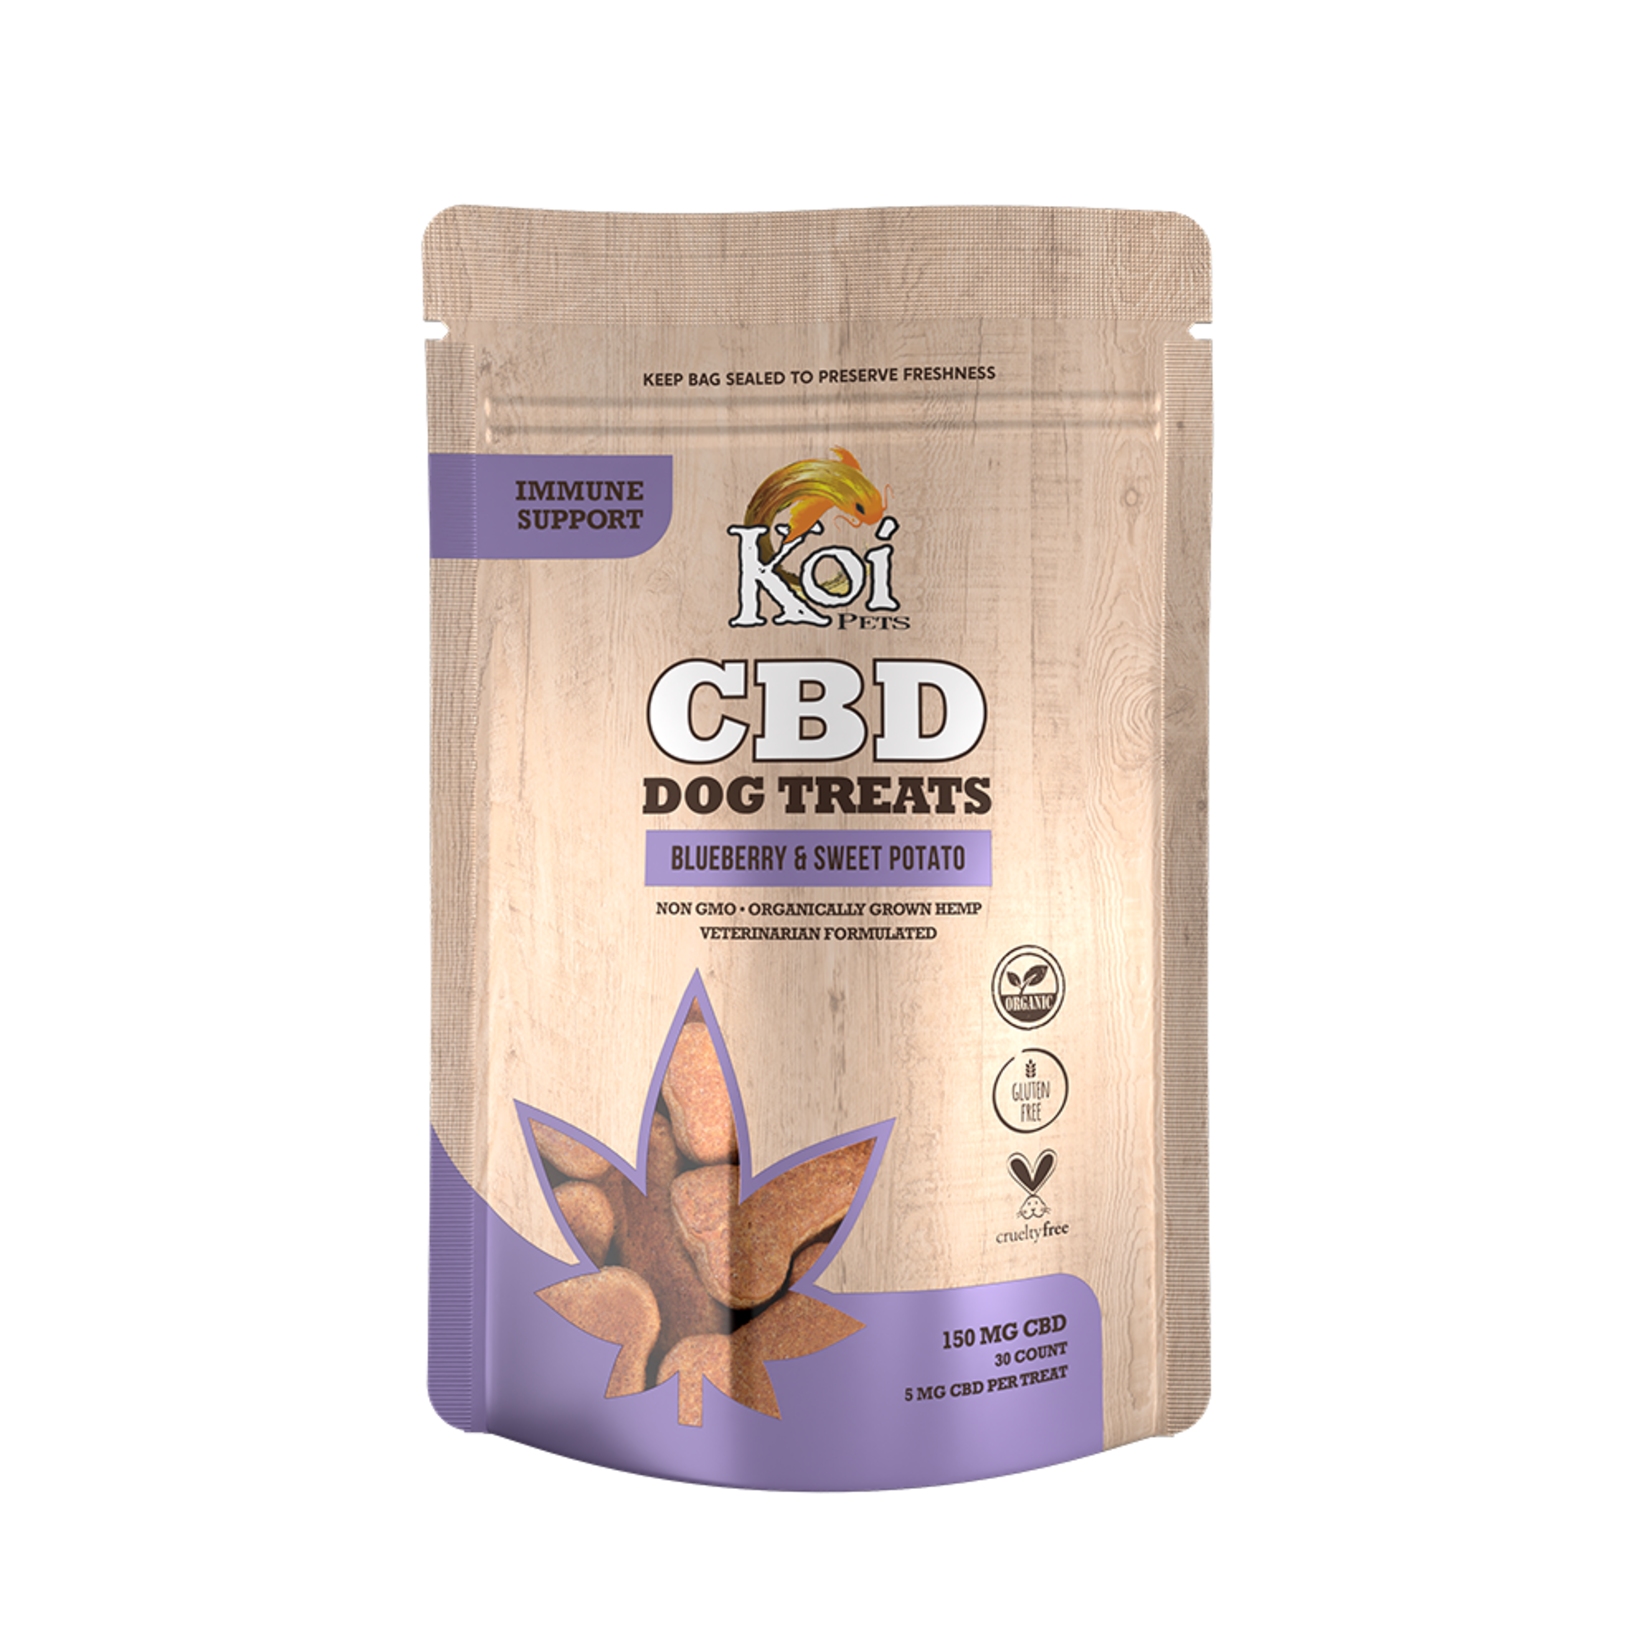 Koi CBD Dog Treats, Immune support, Blueberry & Sweet Potato, 30pcs, 150mg